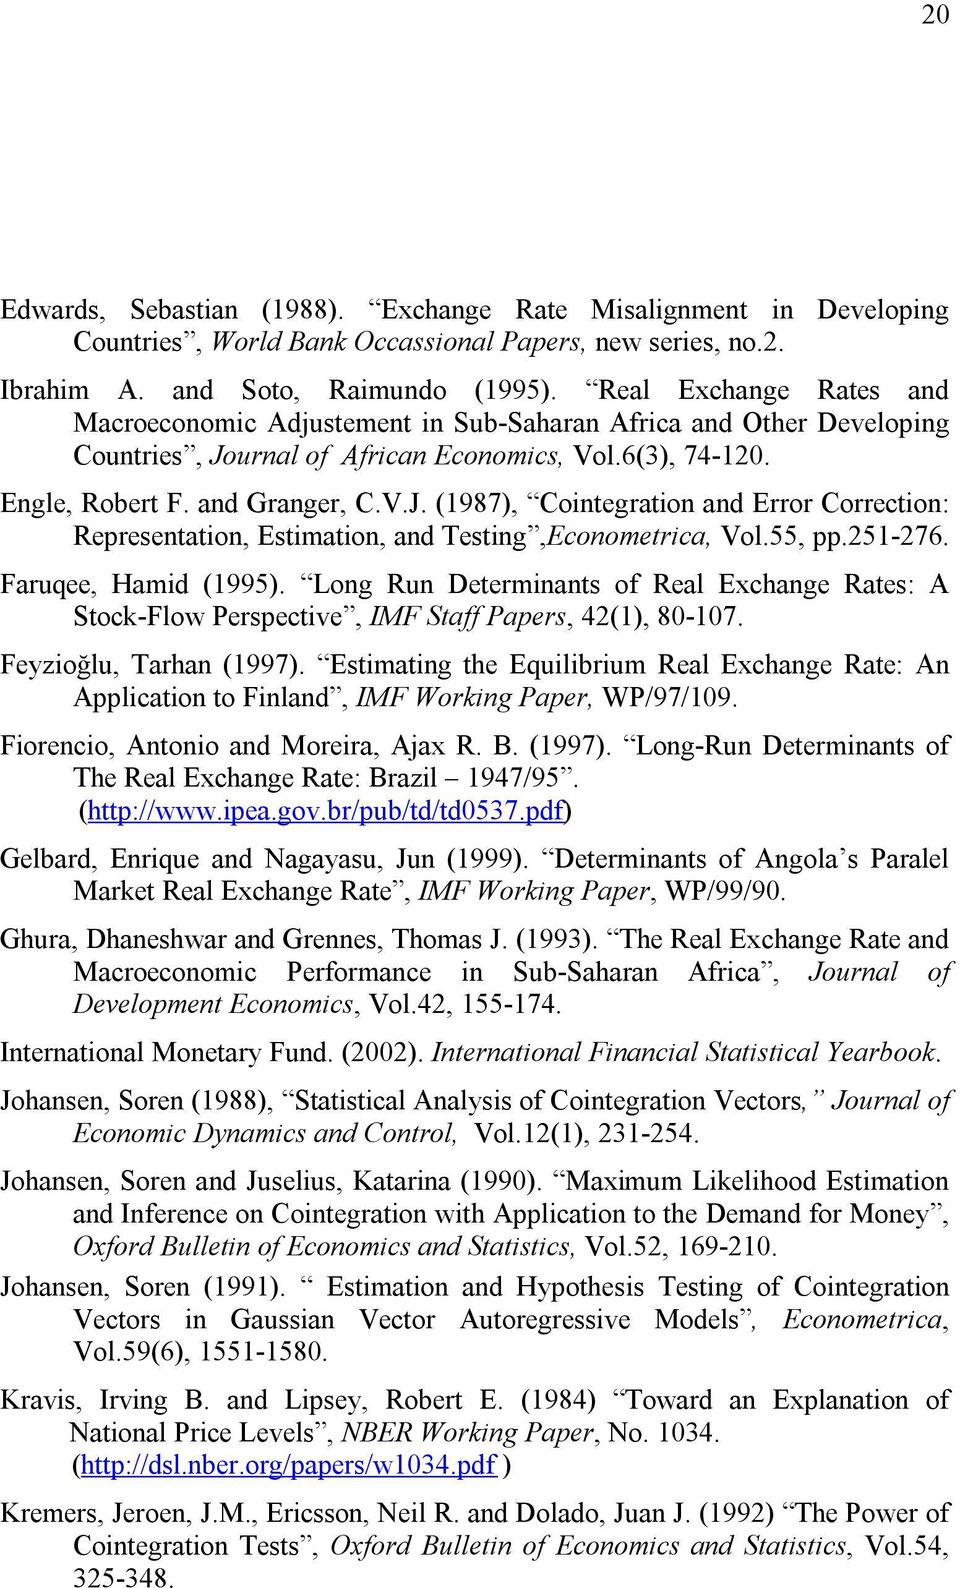 urnal of African Economics, Vol.6(3), 74-20. Engle, Robert F. and Granger, C.V.J. (987), Cointegration and Error Correction: Representation, Estimation, and Testing,Econometrica, Vol.55, pp.25-276.